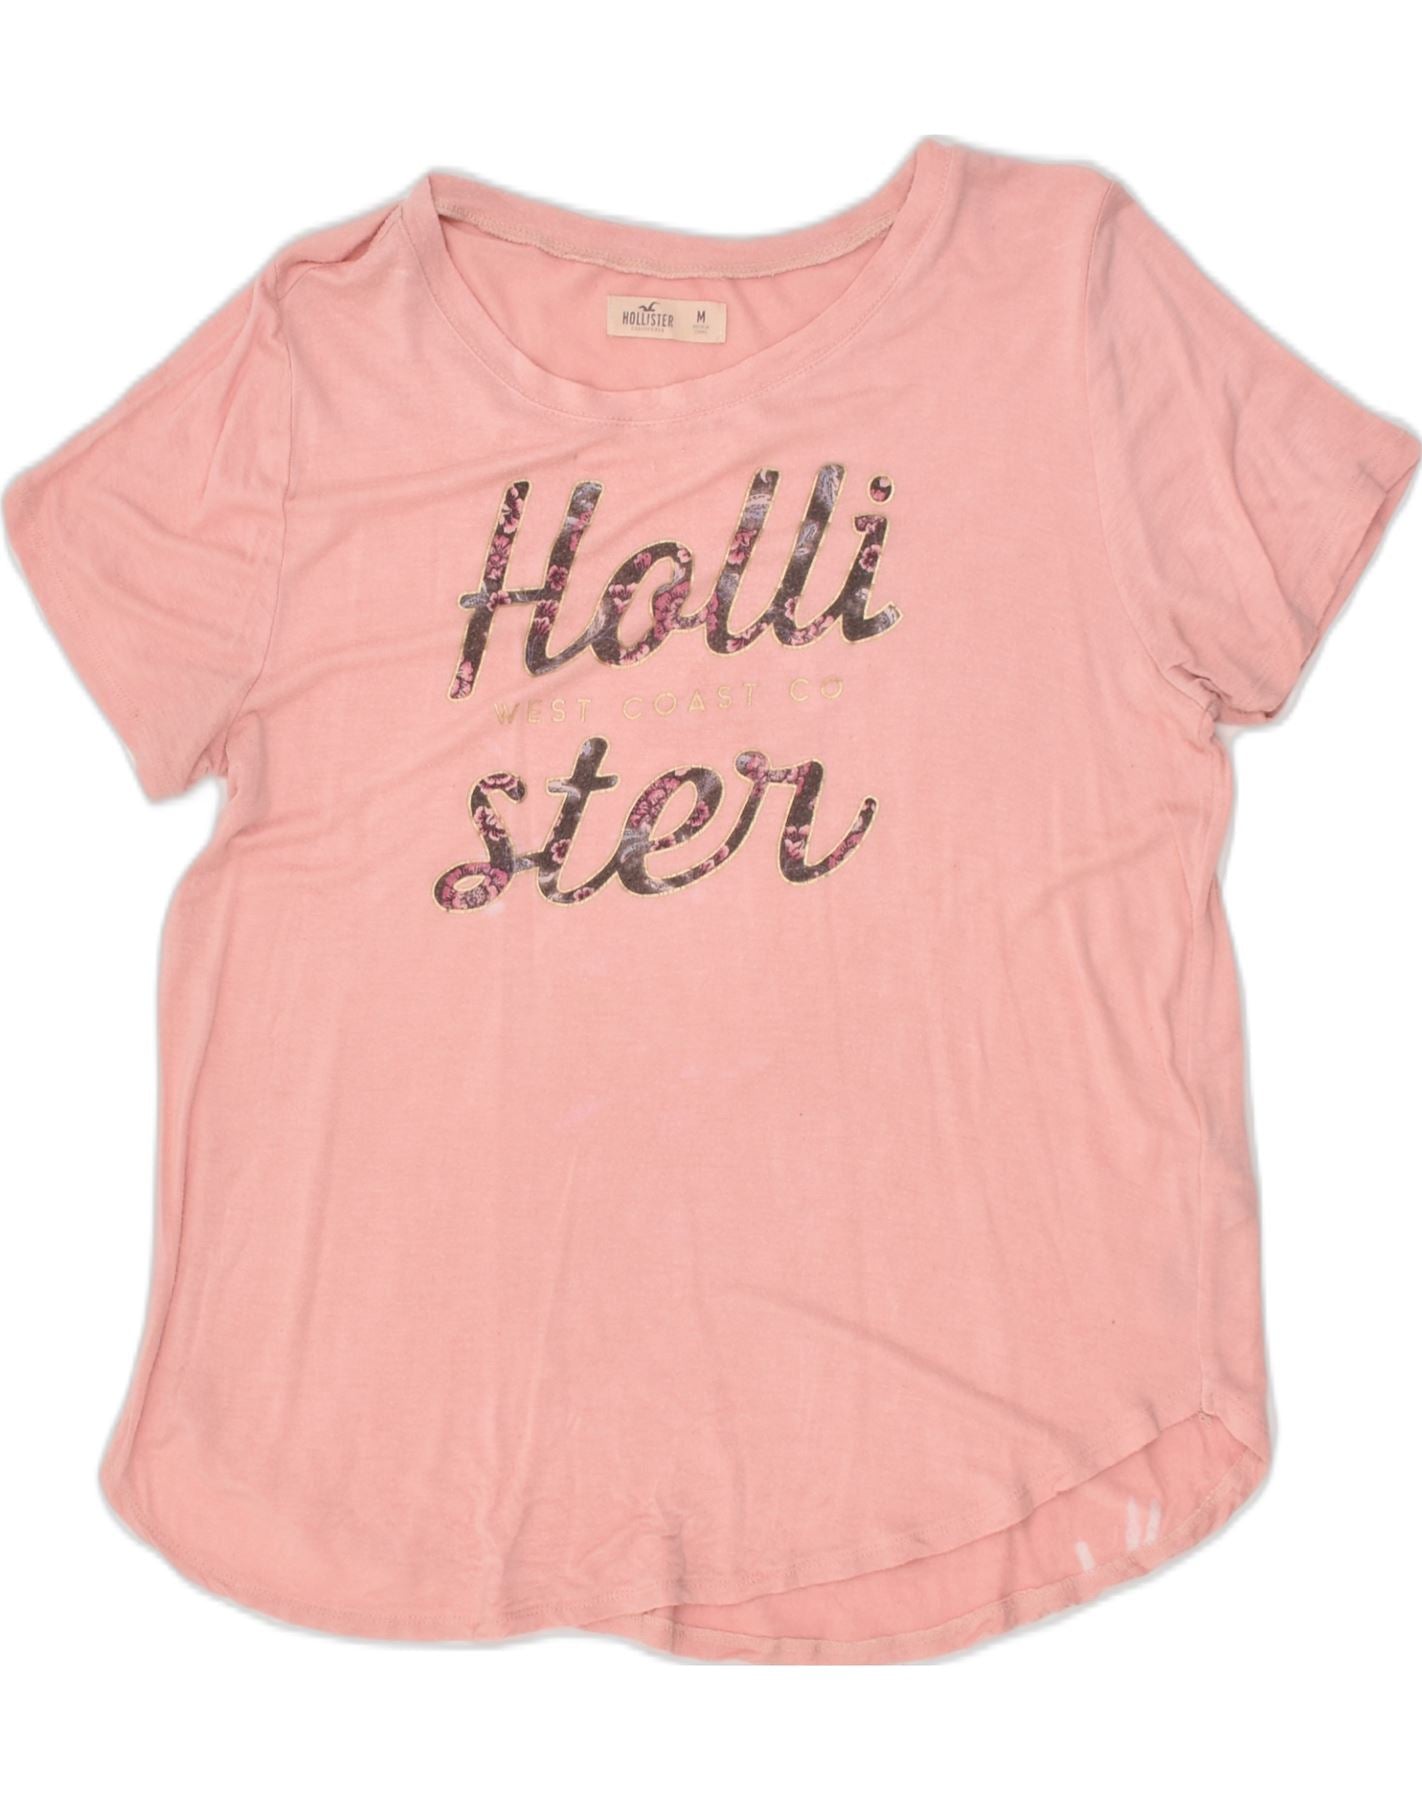 HOLLISTER Womens Graphic T-Shirt Top UK 12 Medium Pink Viscose